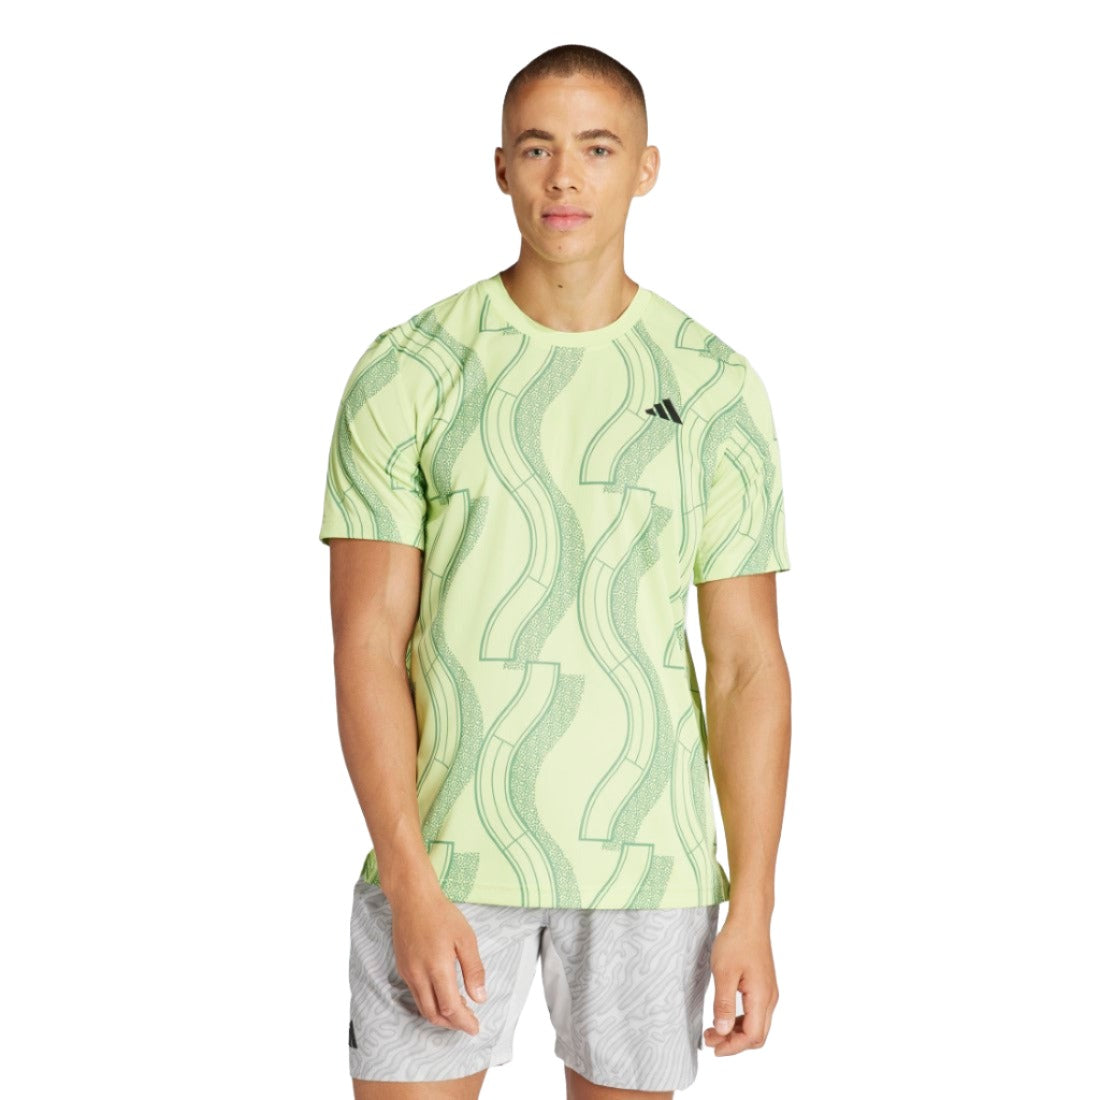 Club Tennis Graphic T-Shirt